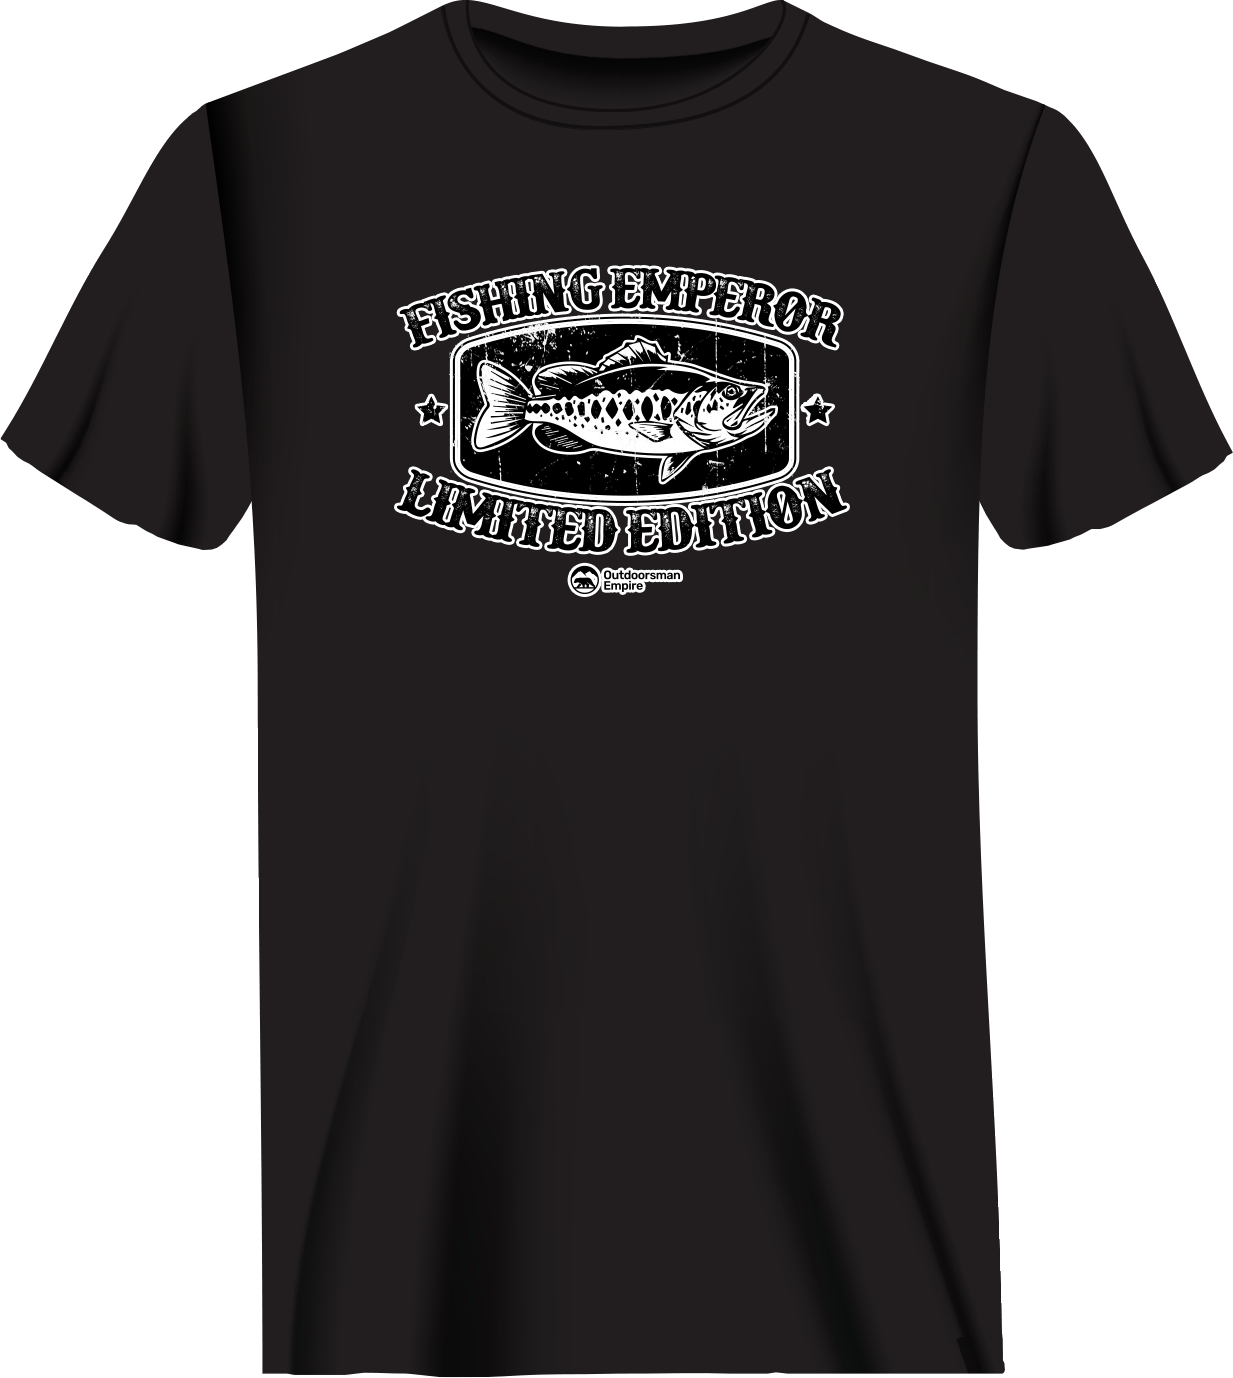 Fishing Emperor Limited Edition Man T-Shirt